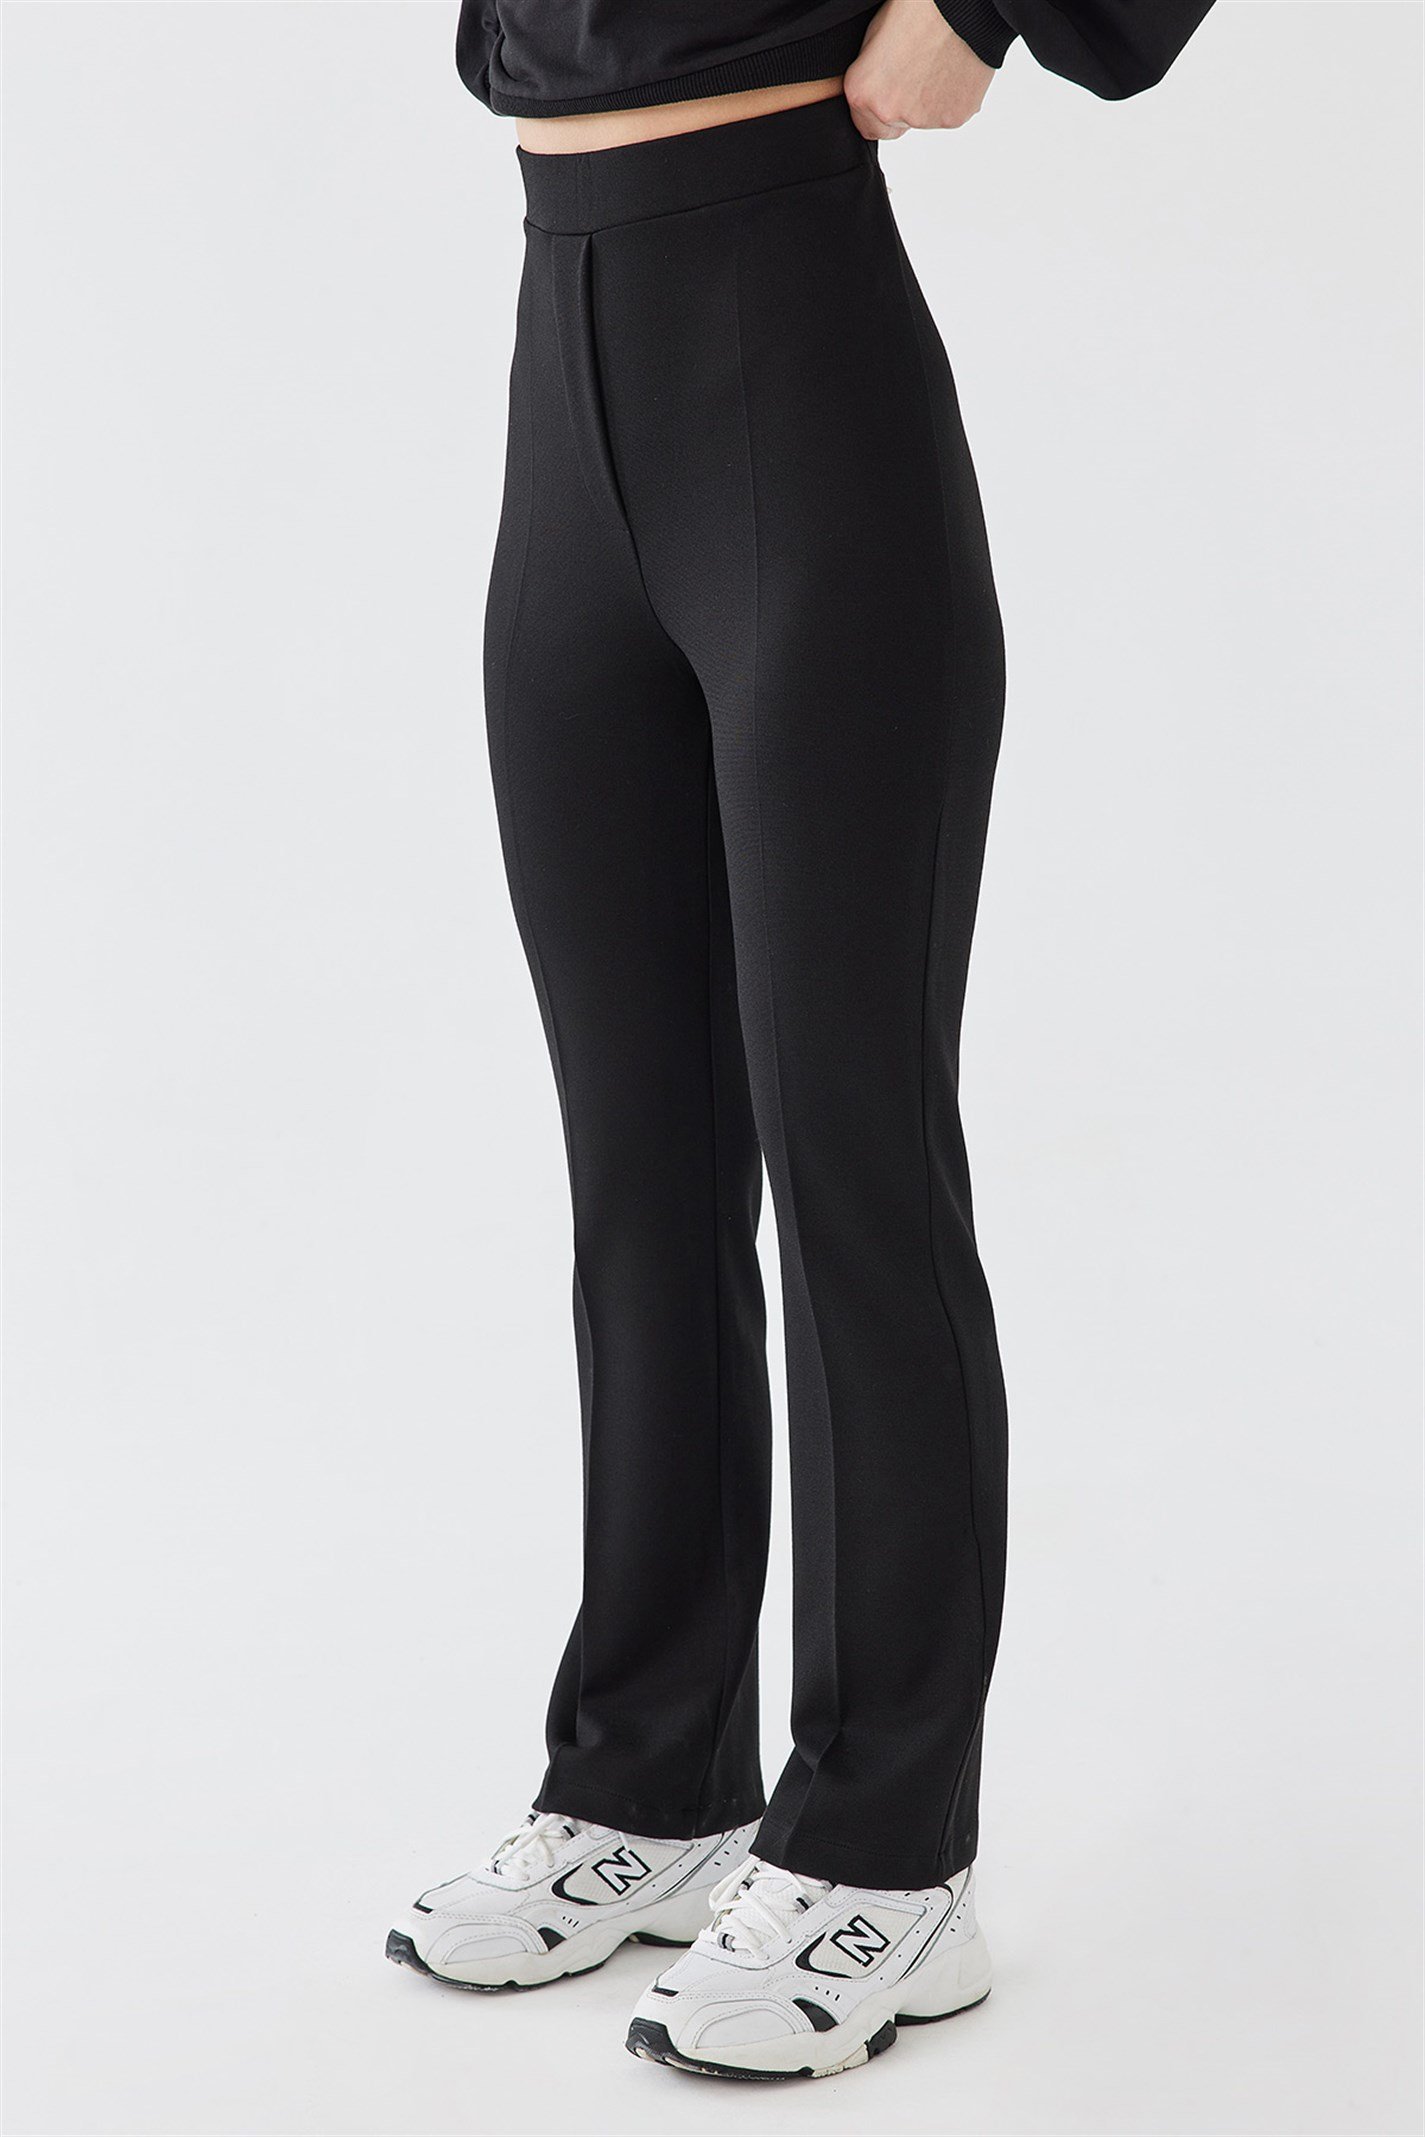 Siyah Toparlayıcı Flare Pantolon | Suud Collection